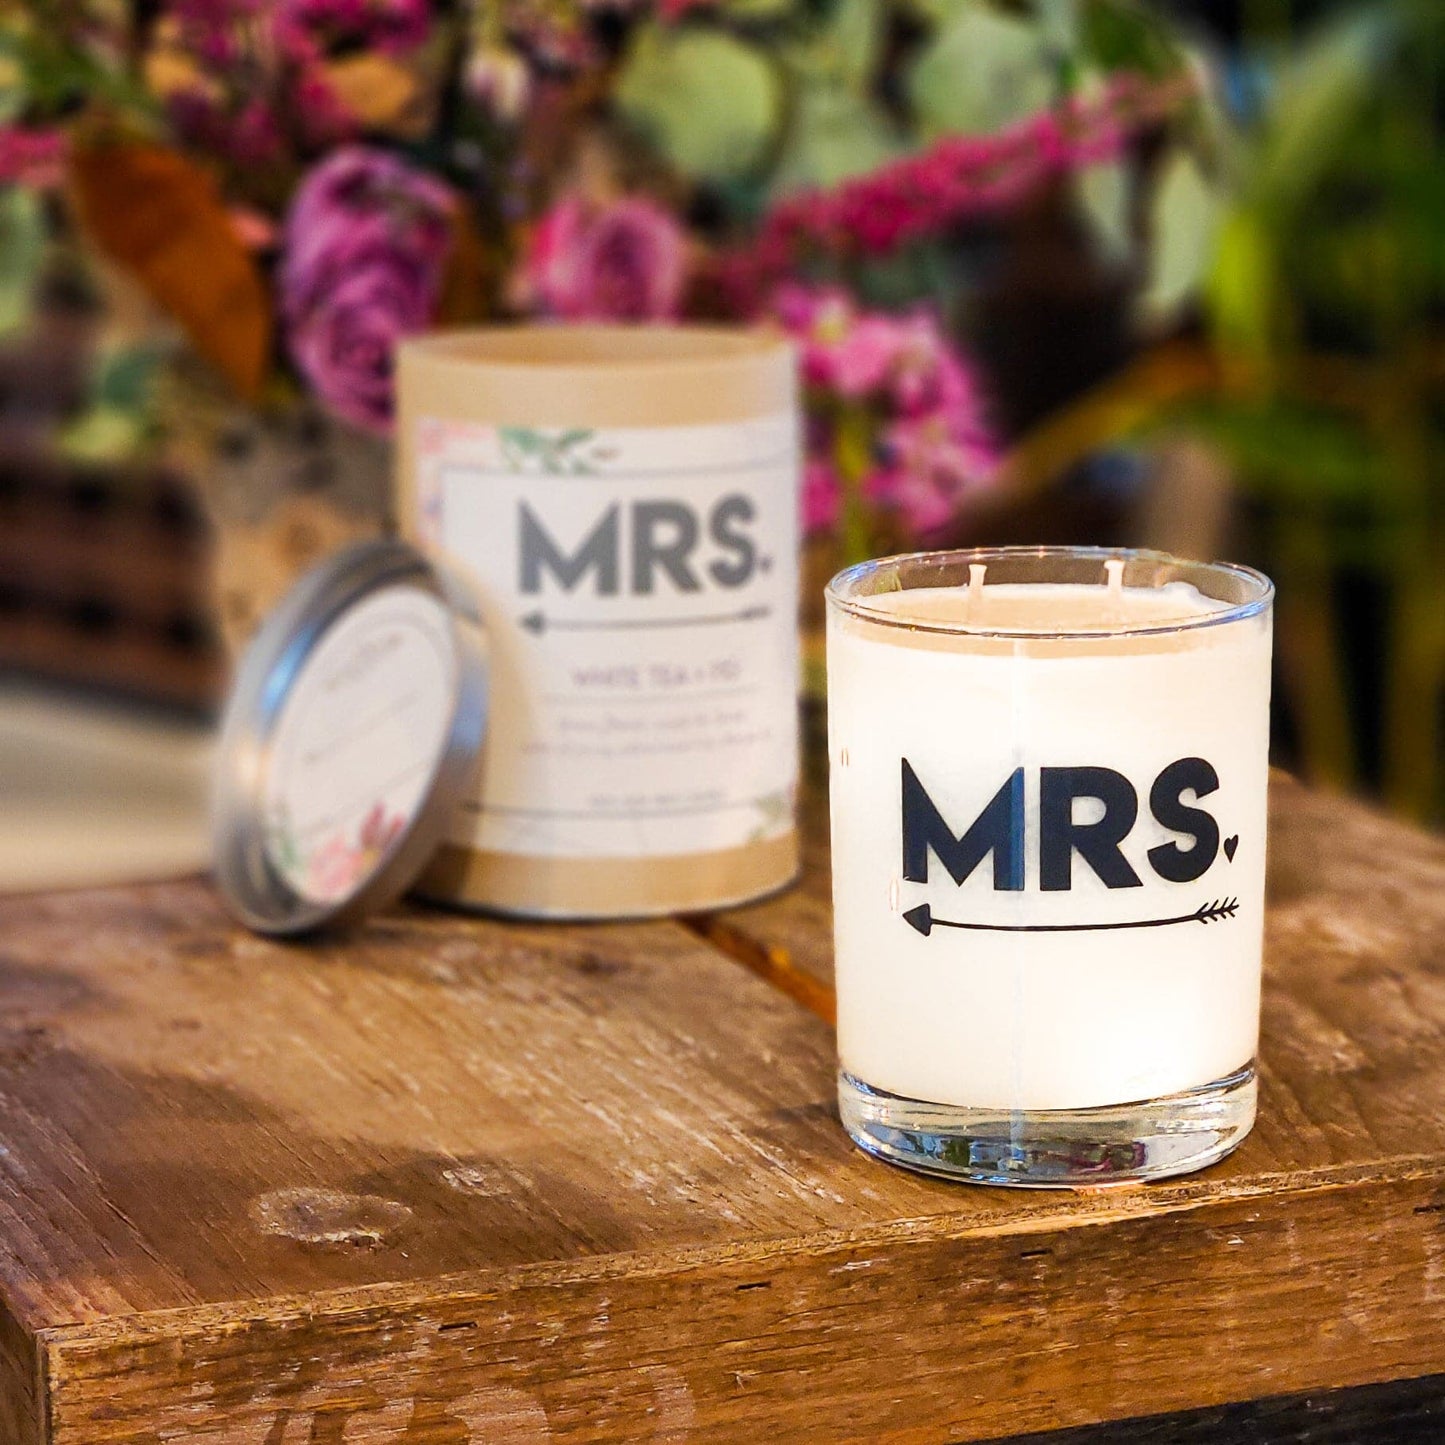 Mrs. White Tea + Fig Gift Tube Candle